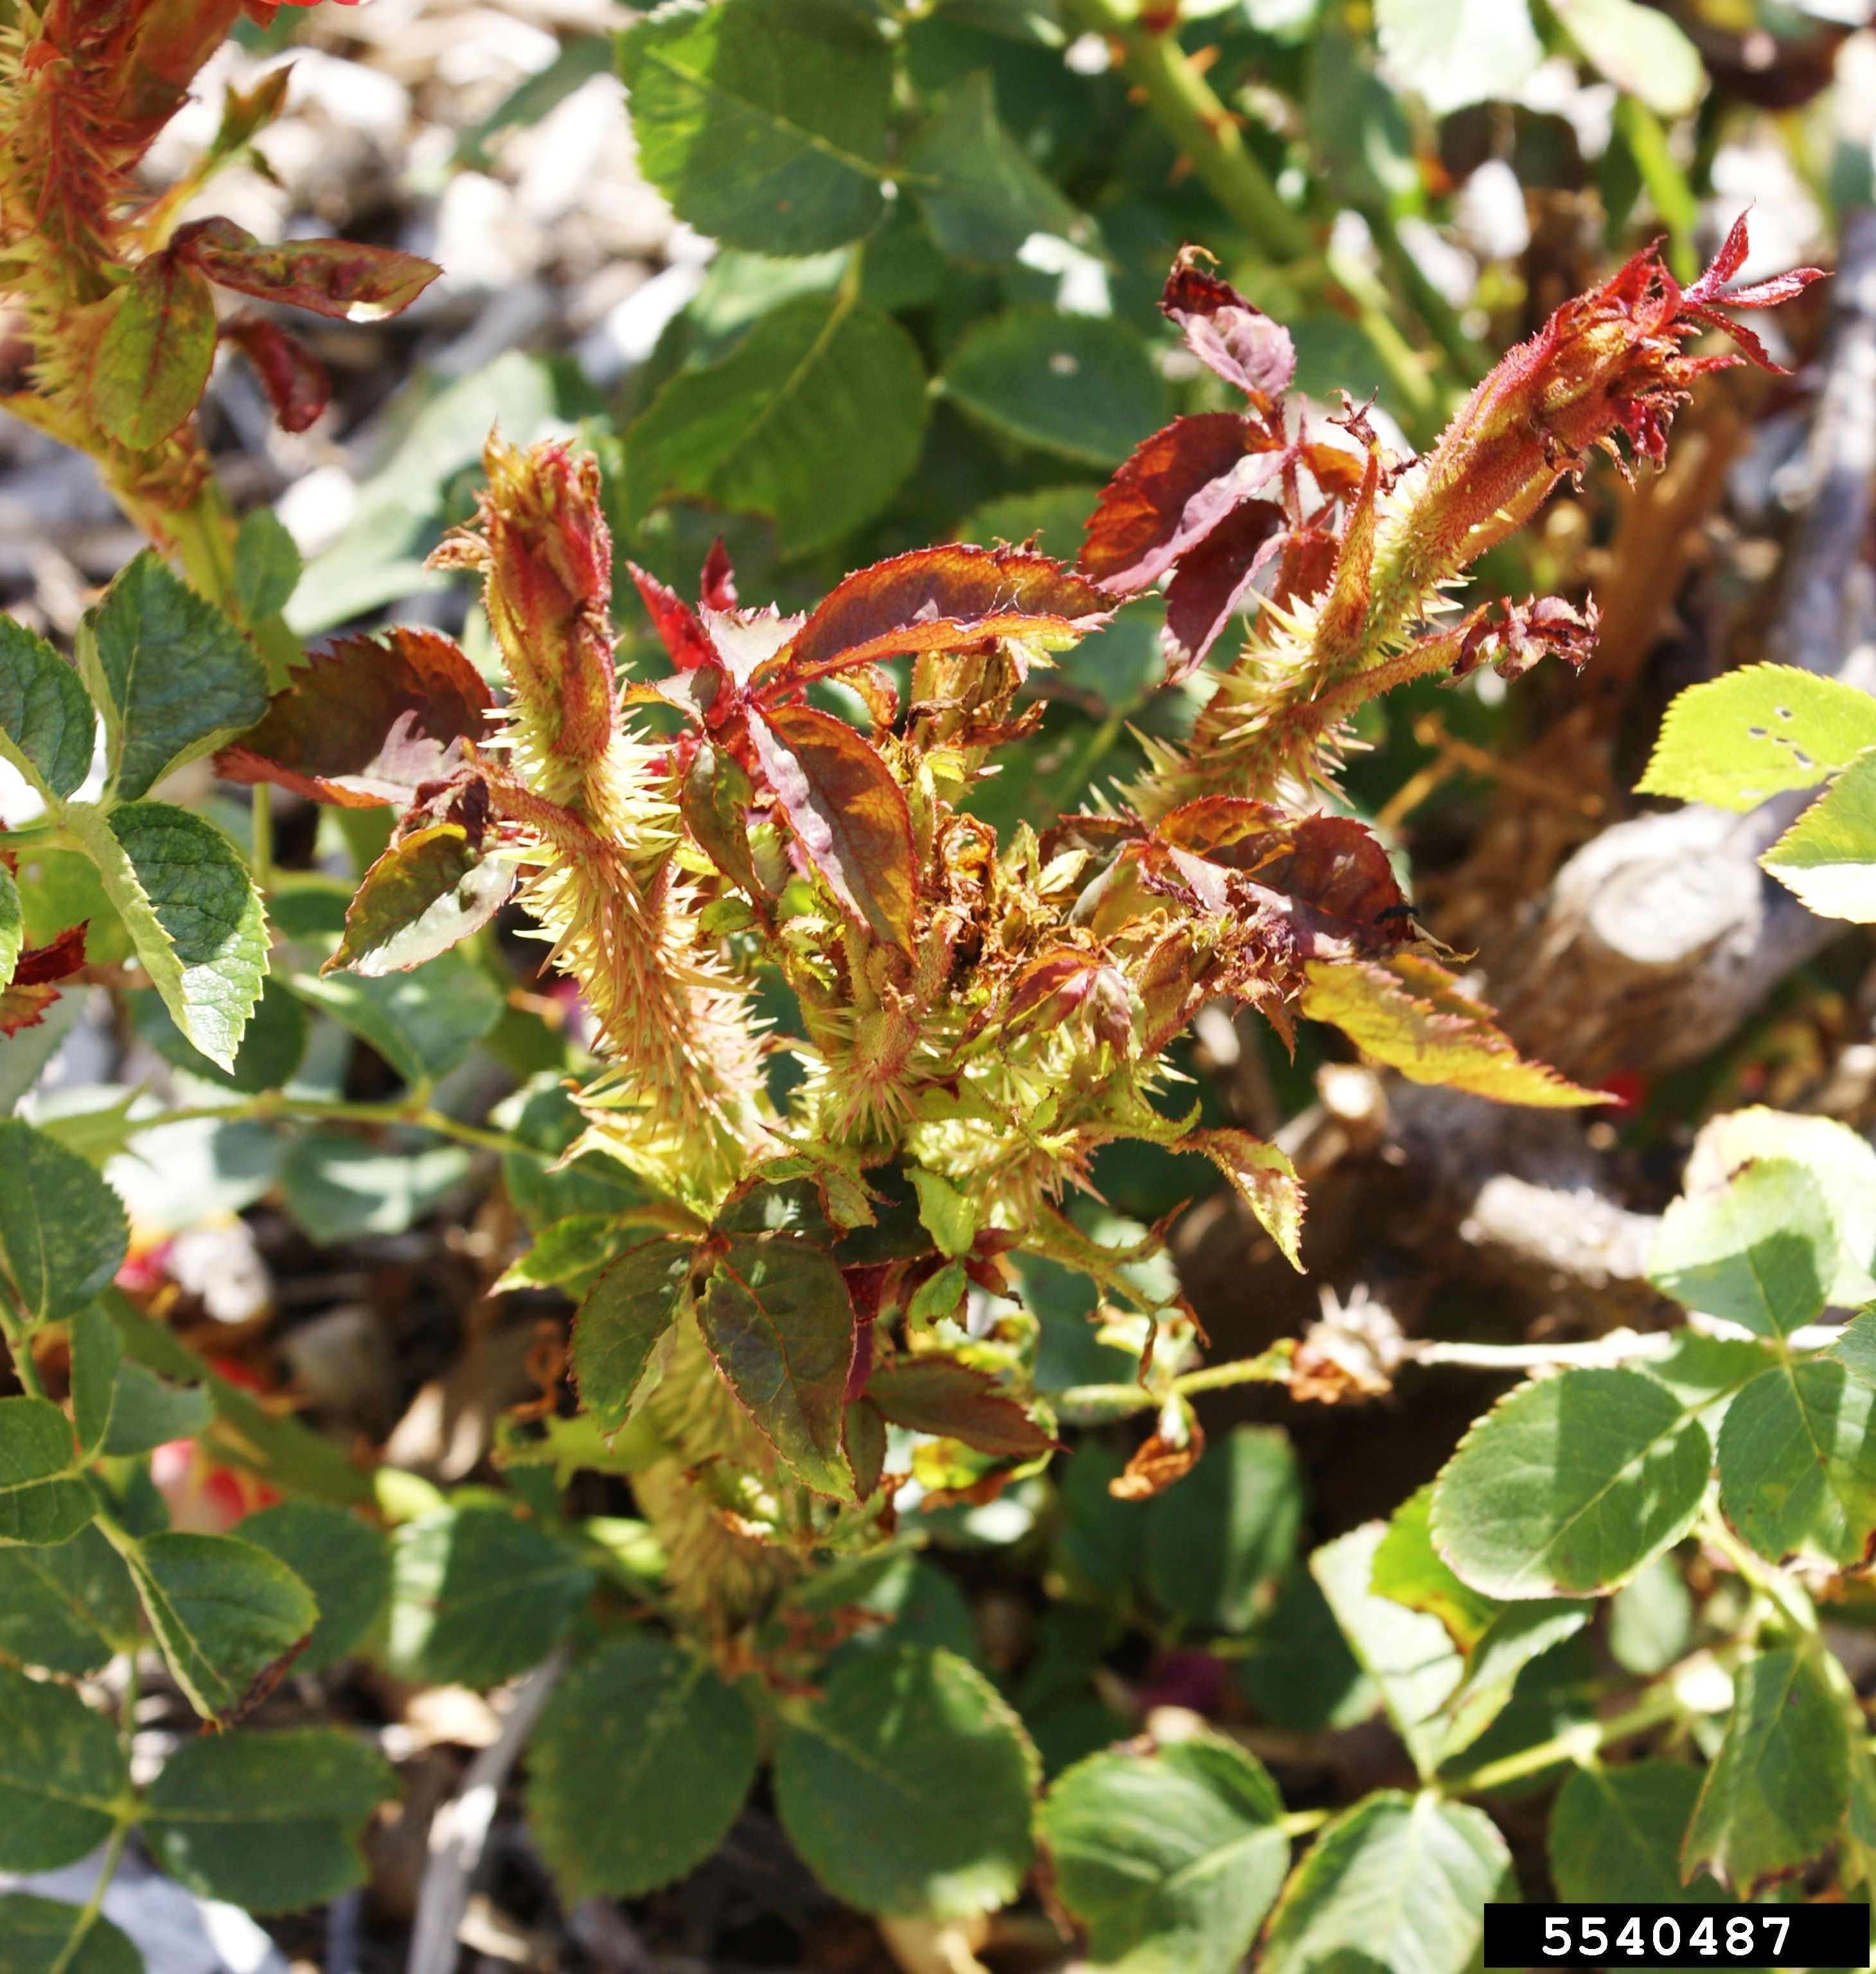 Rose rosette disease on leaves and stems